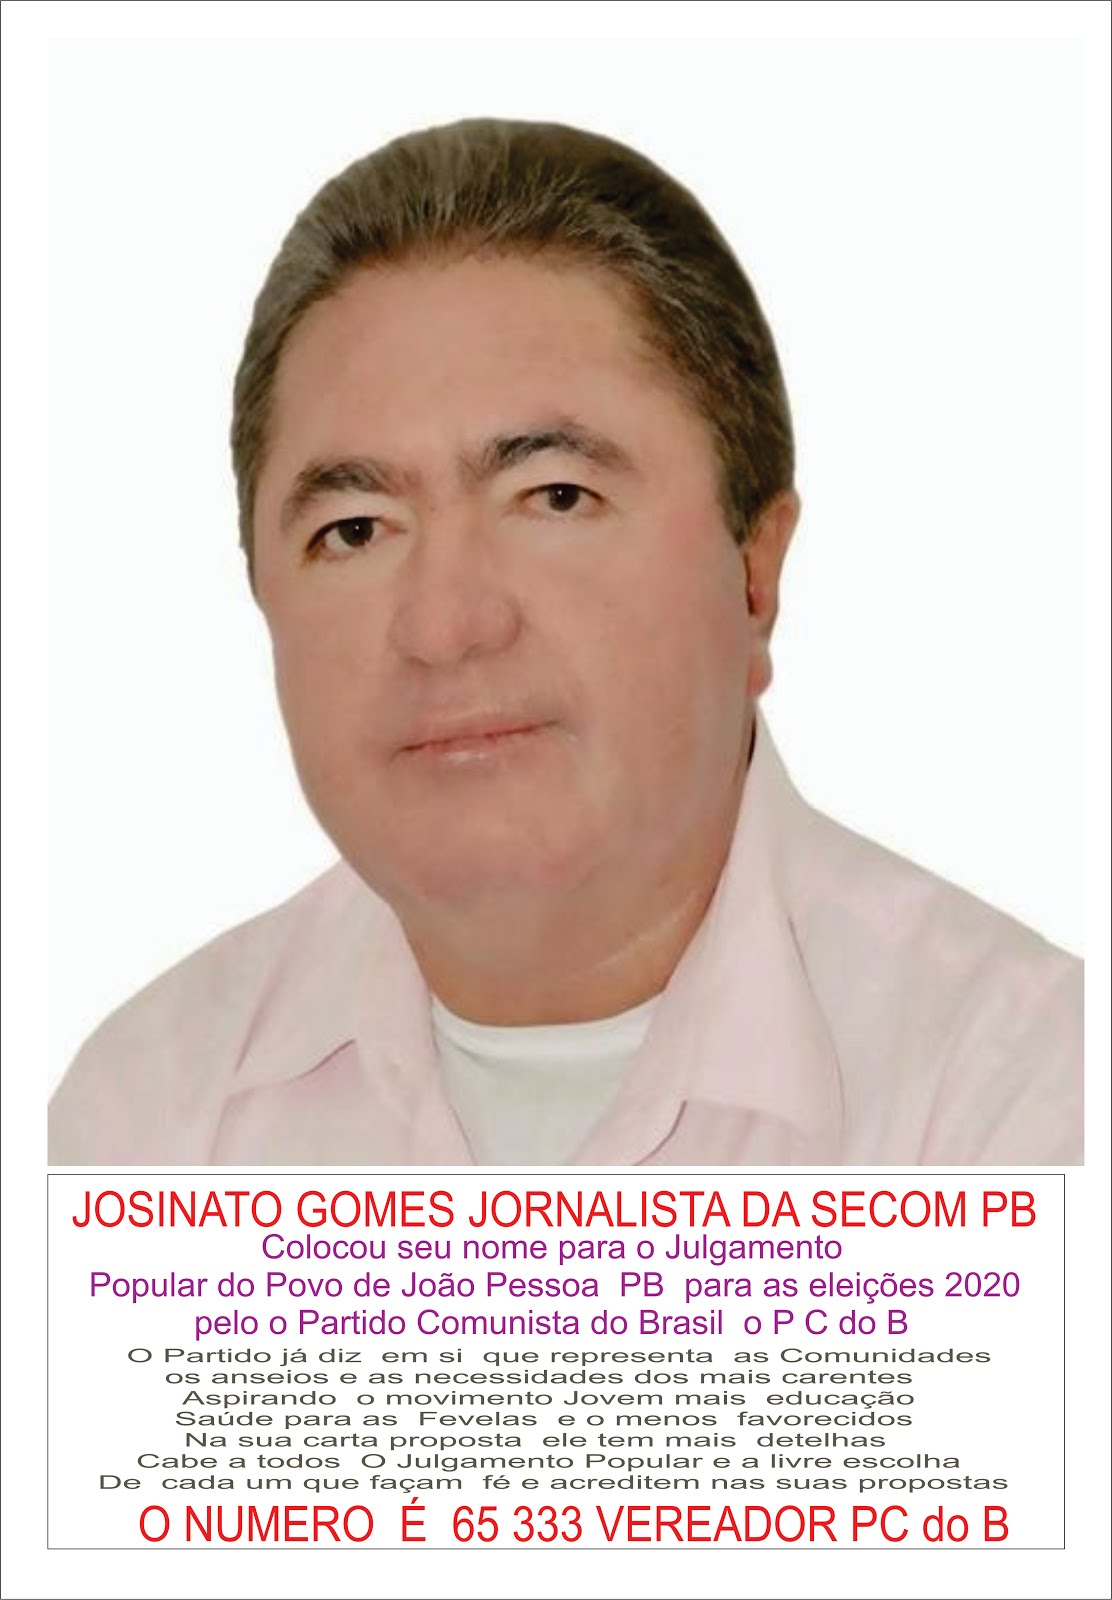 JOSINATO GOMES CORREGENDO  NA TELA